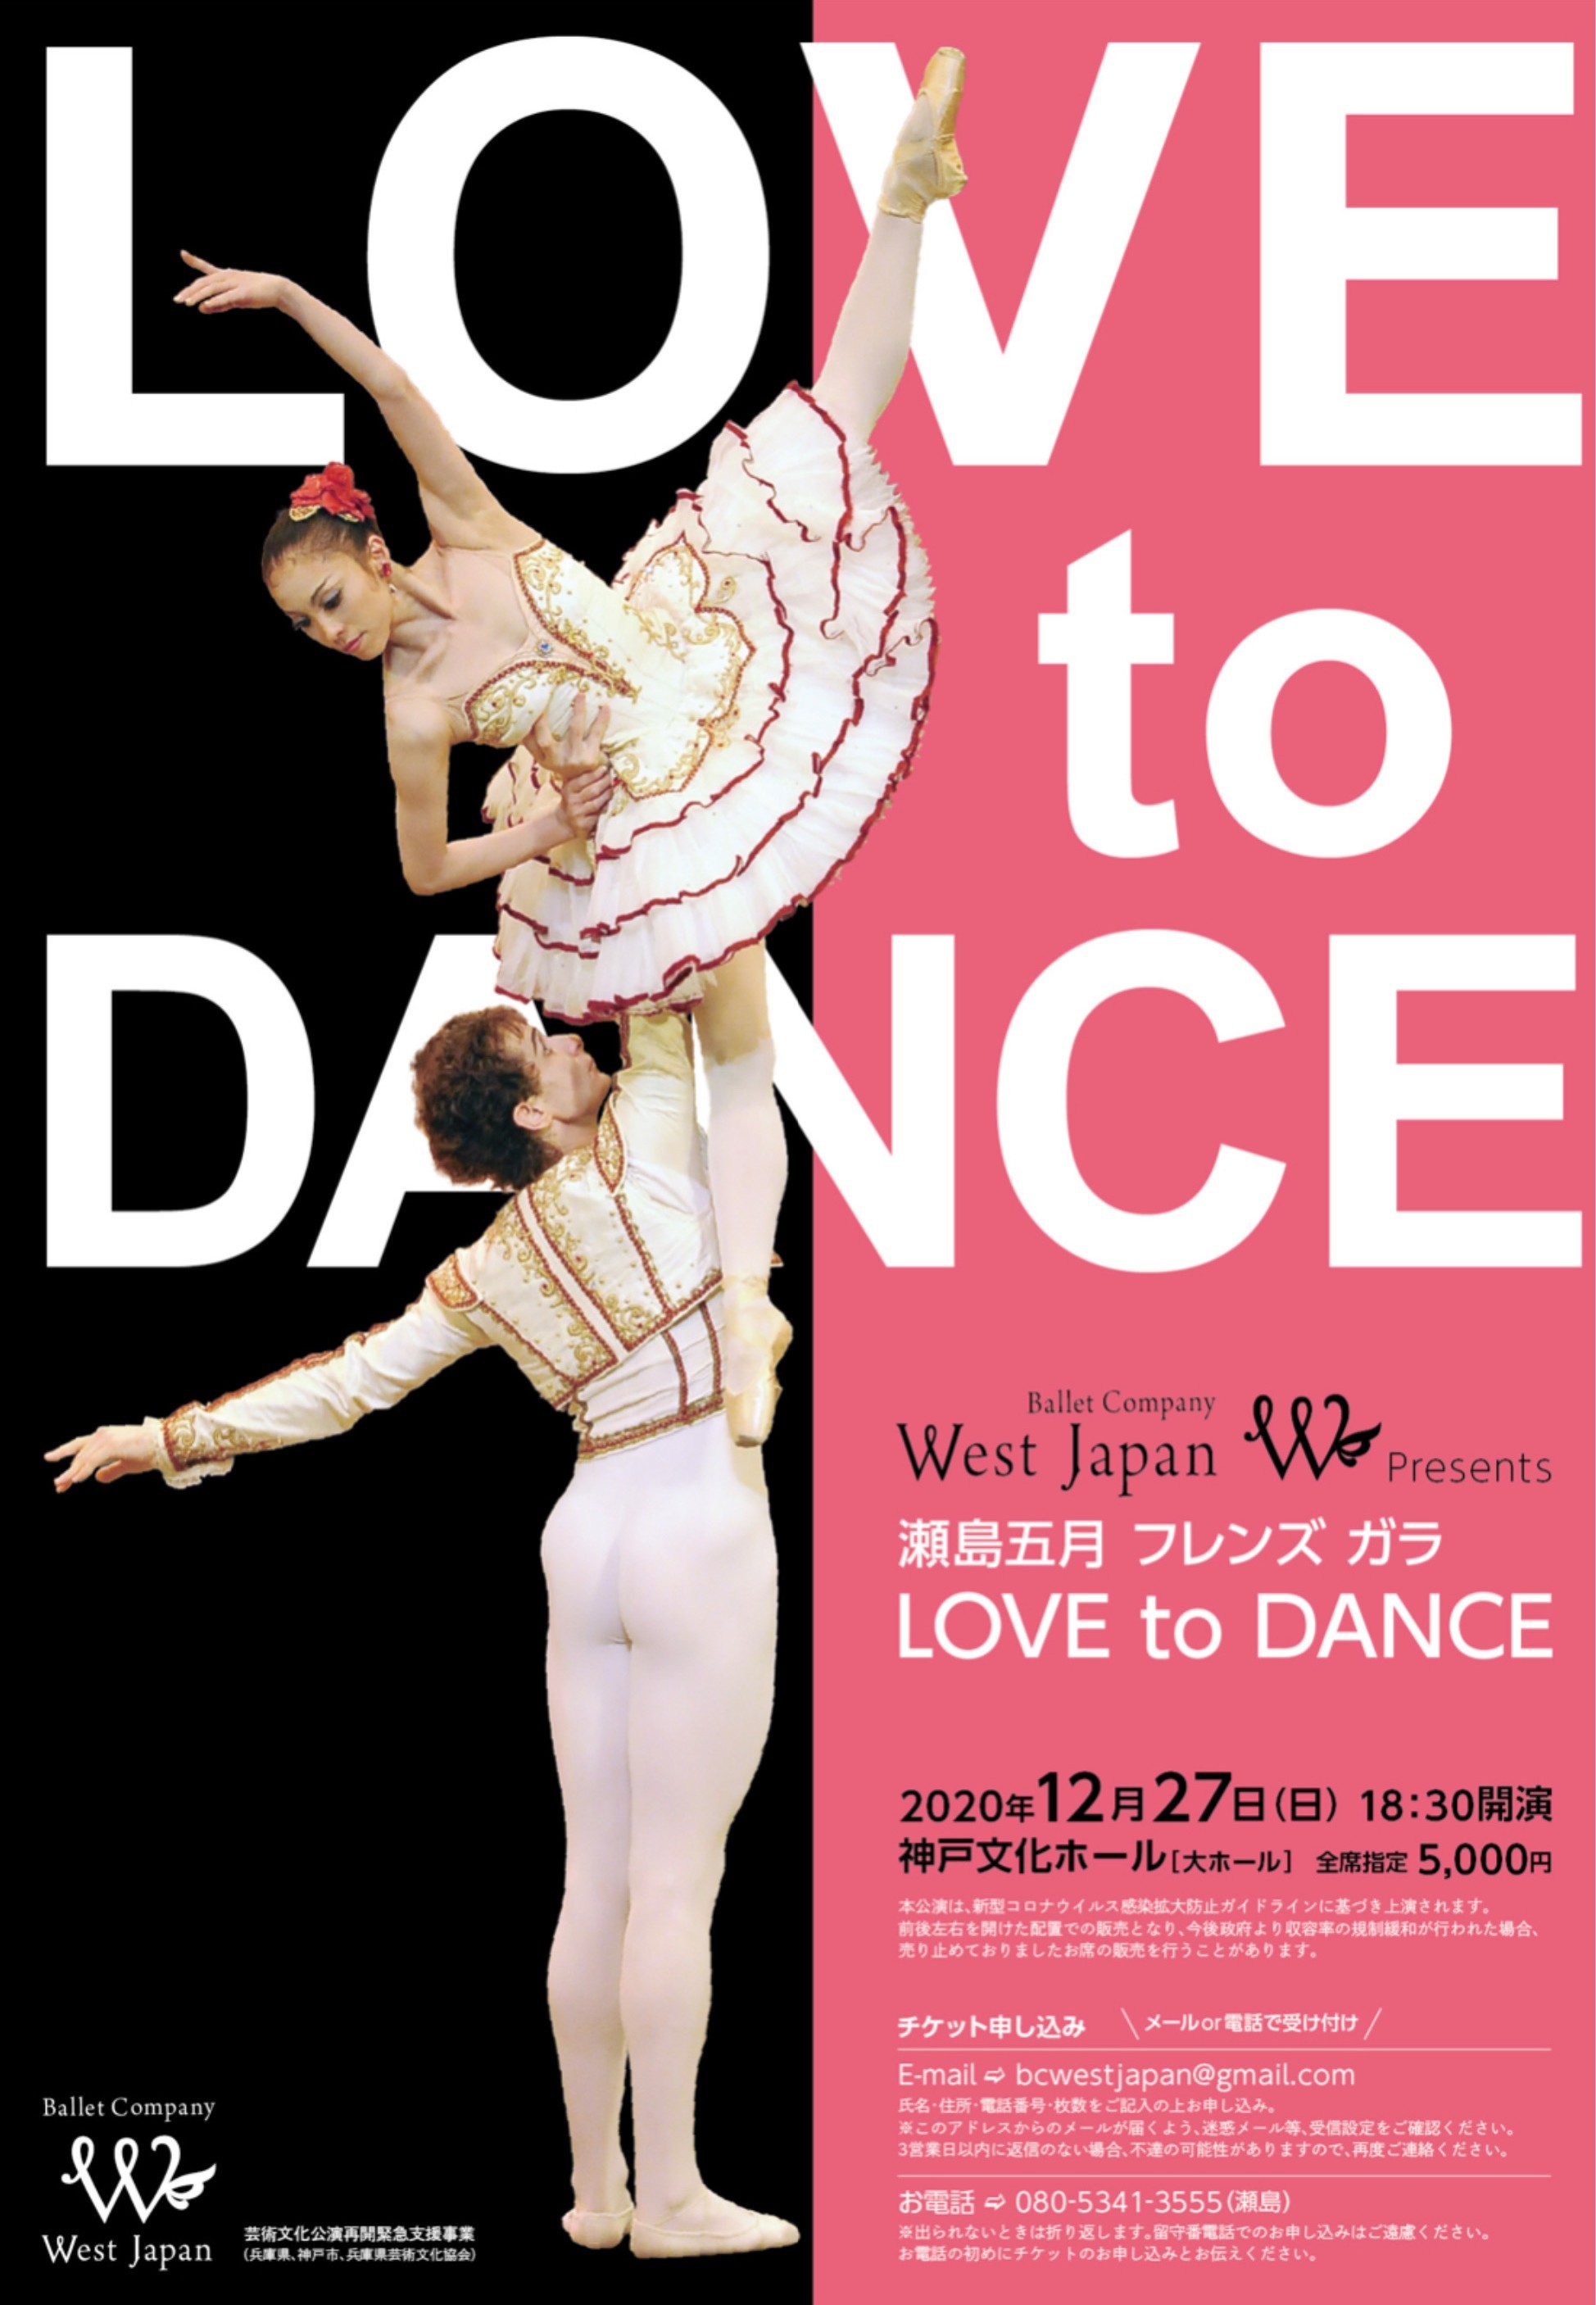 Ballet Company West Japan presents 瀬島五月 フレンズ ガラ「LOVE to DANCE」フライヤー